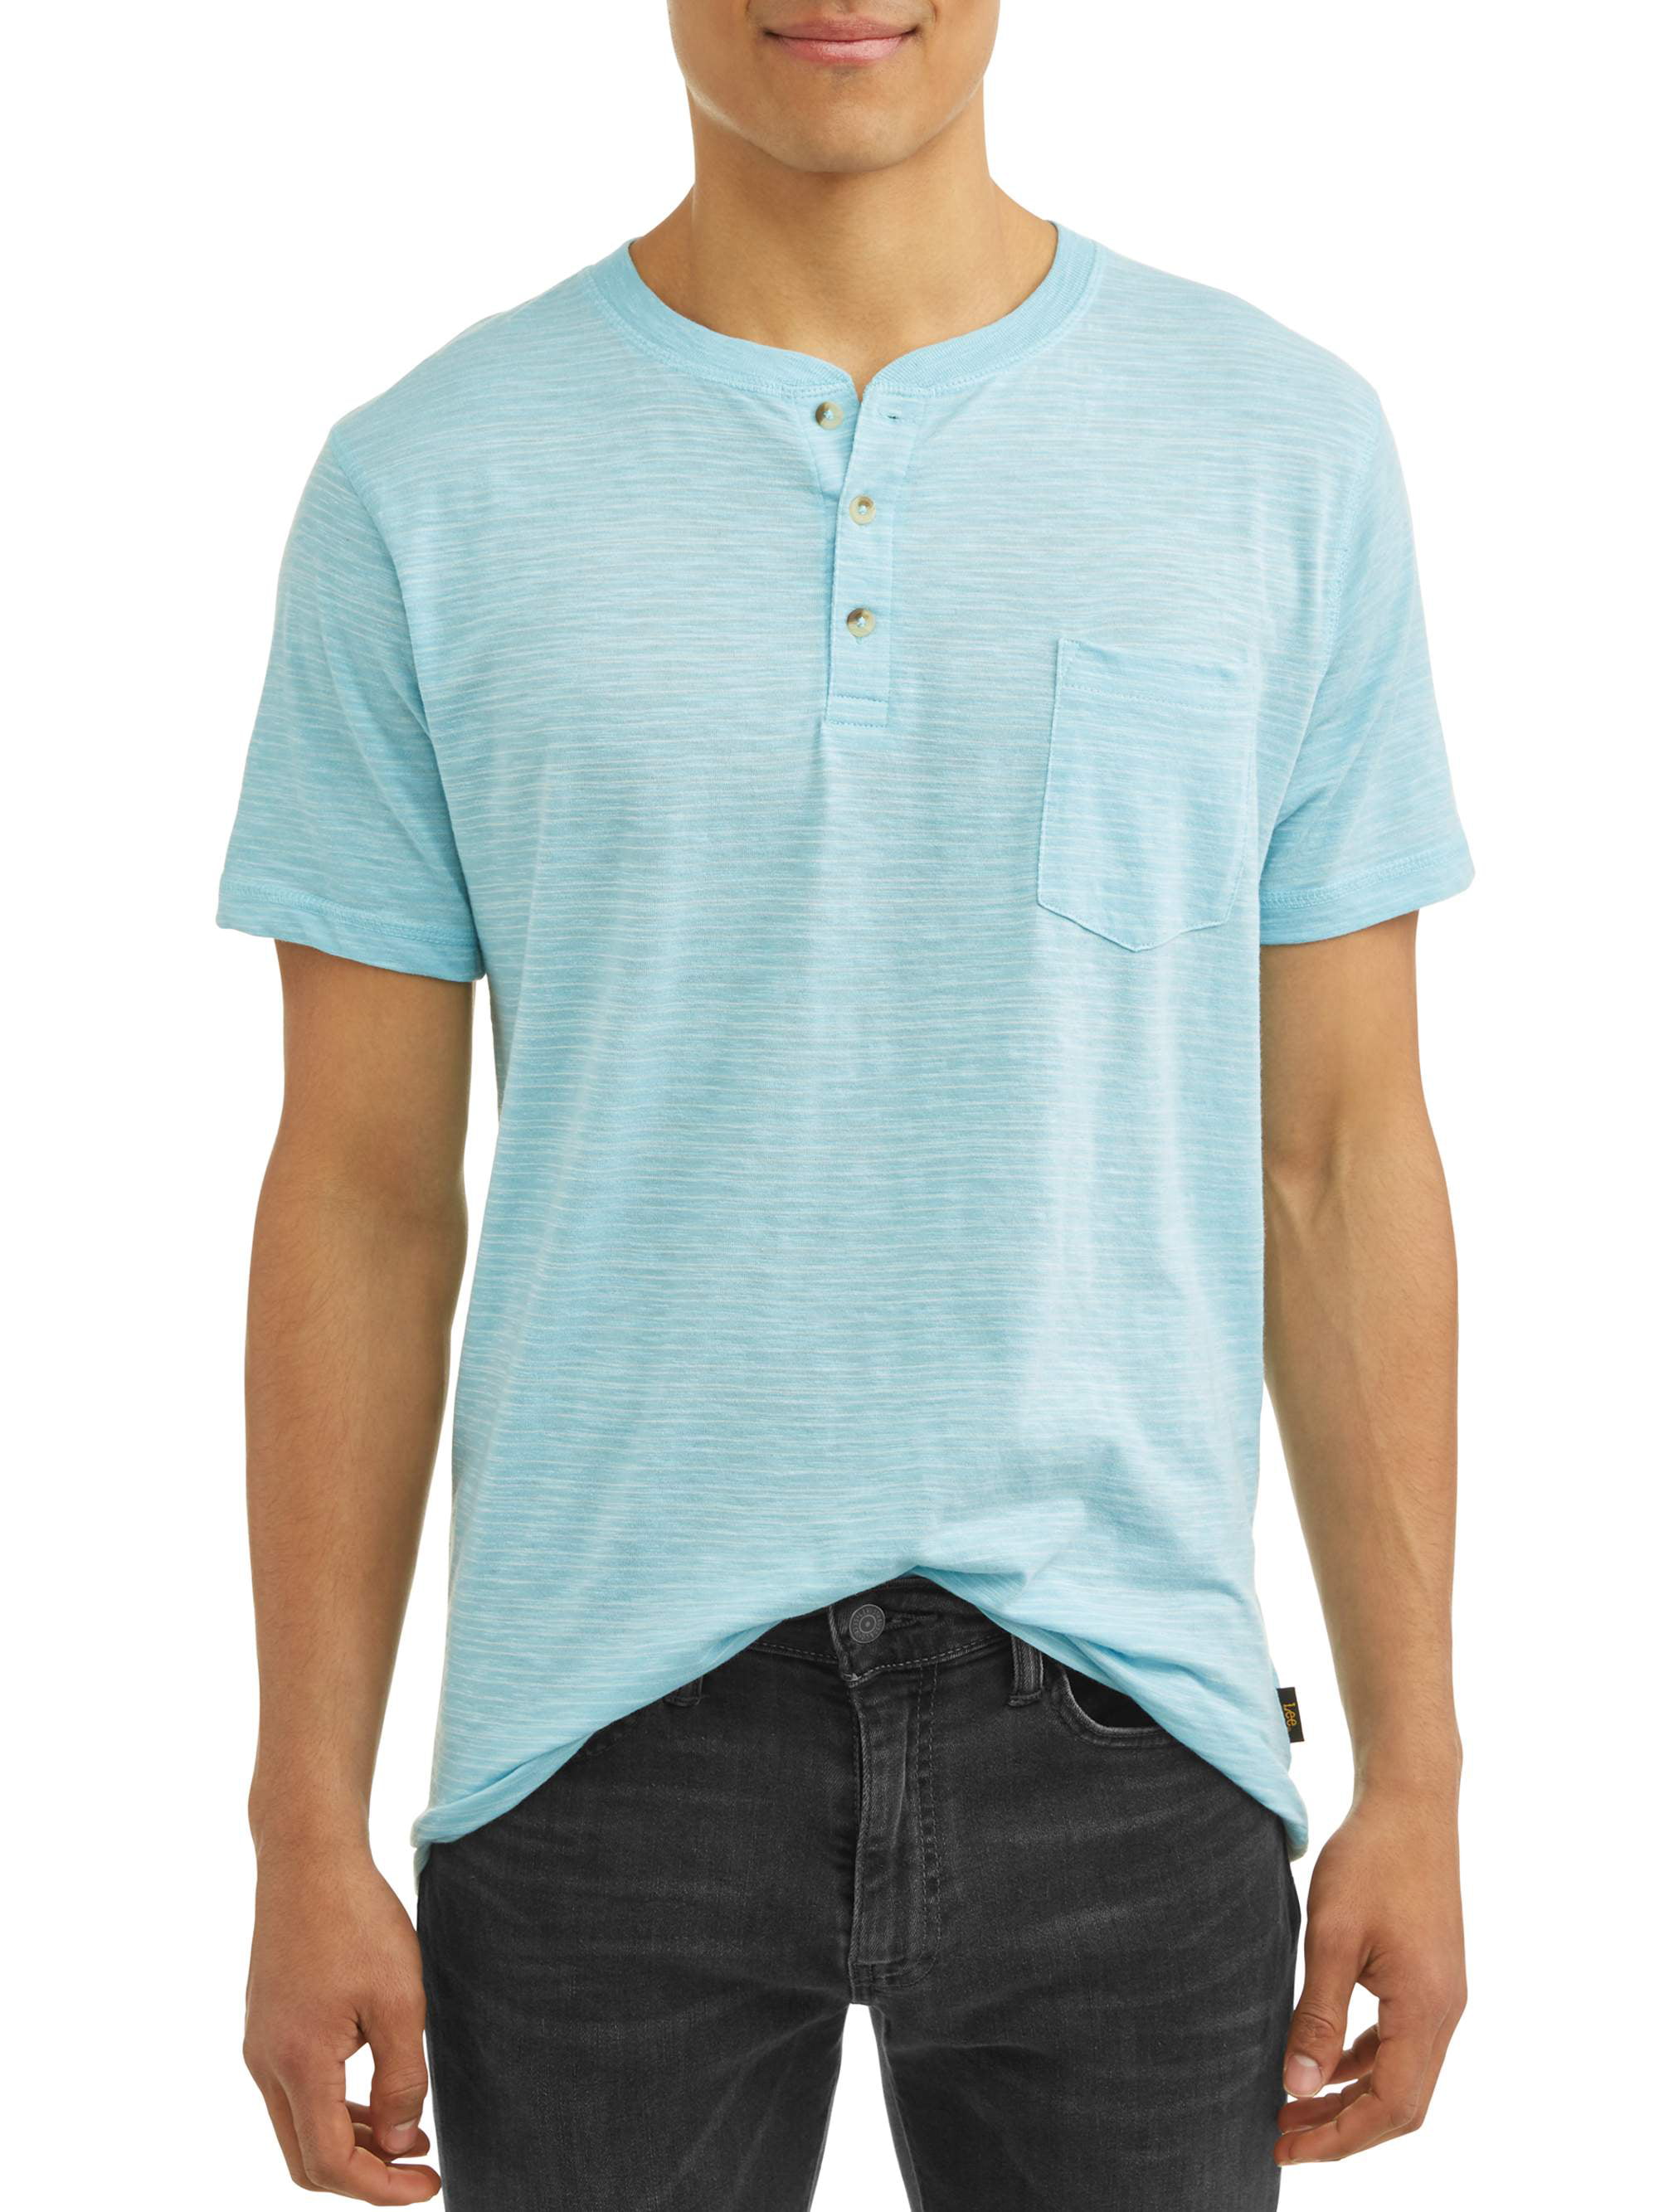 Lee Men's Short Sleeve Textured Henley T-Shirt with Pocket - Walmart.com